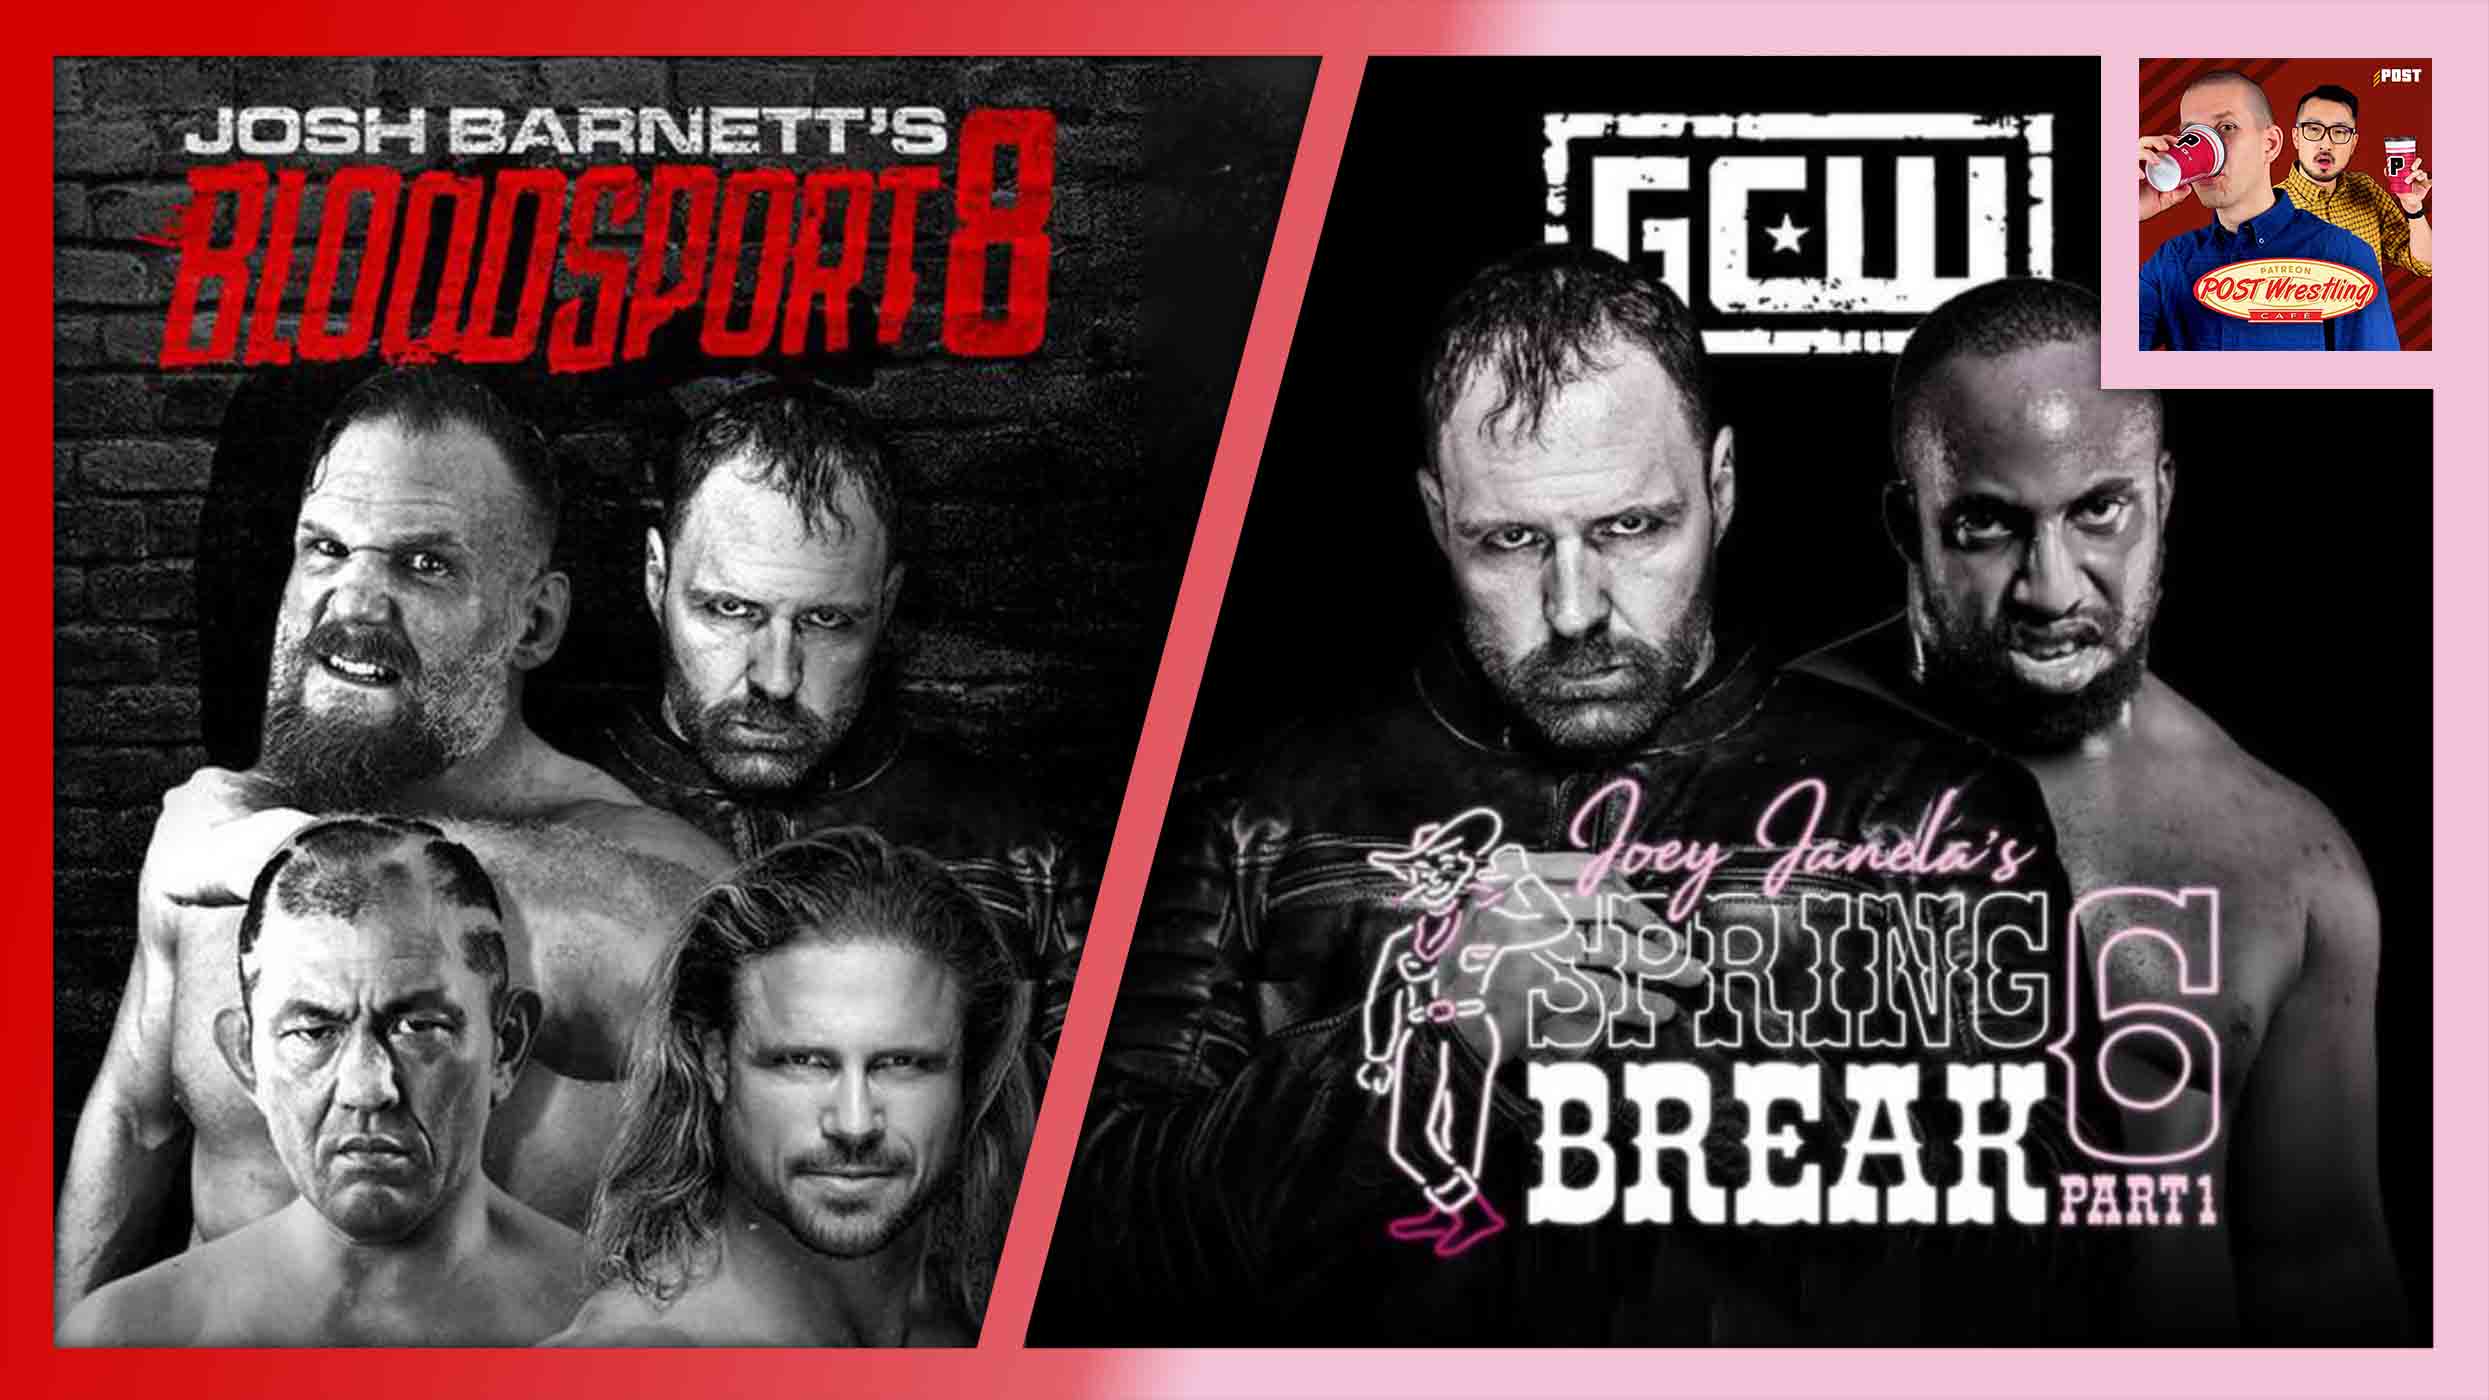 GCW Bloodsport 8 / Spring Break 6 Pt. 1 POST Show POST Wrestling